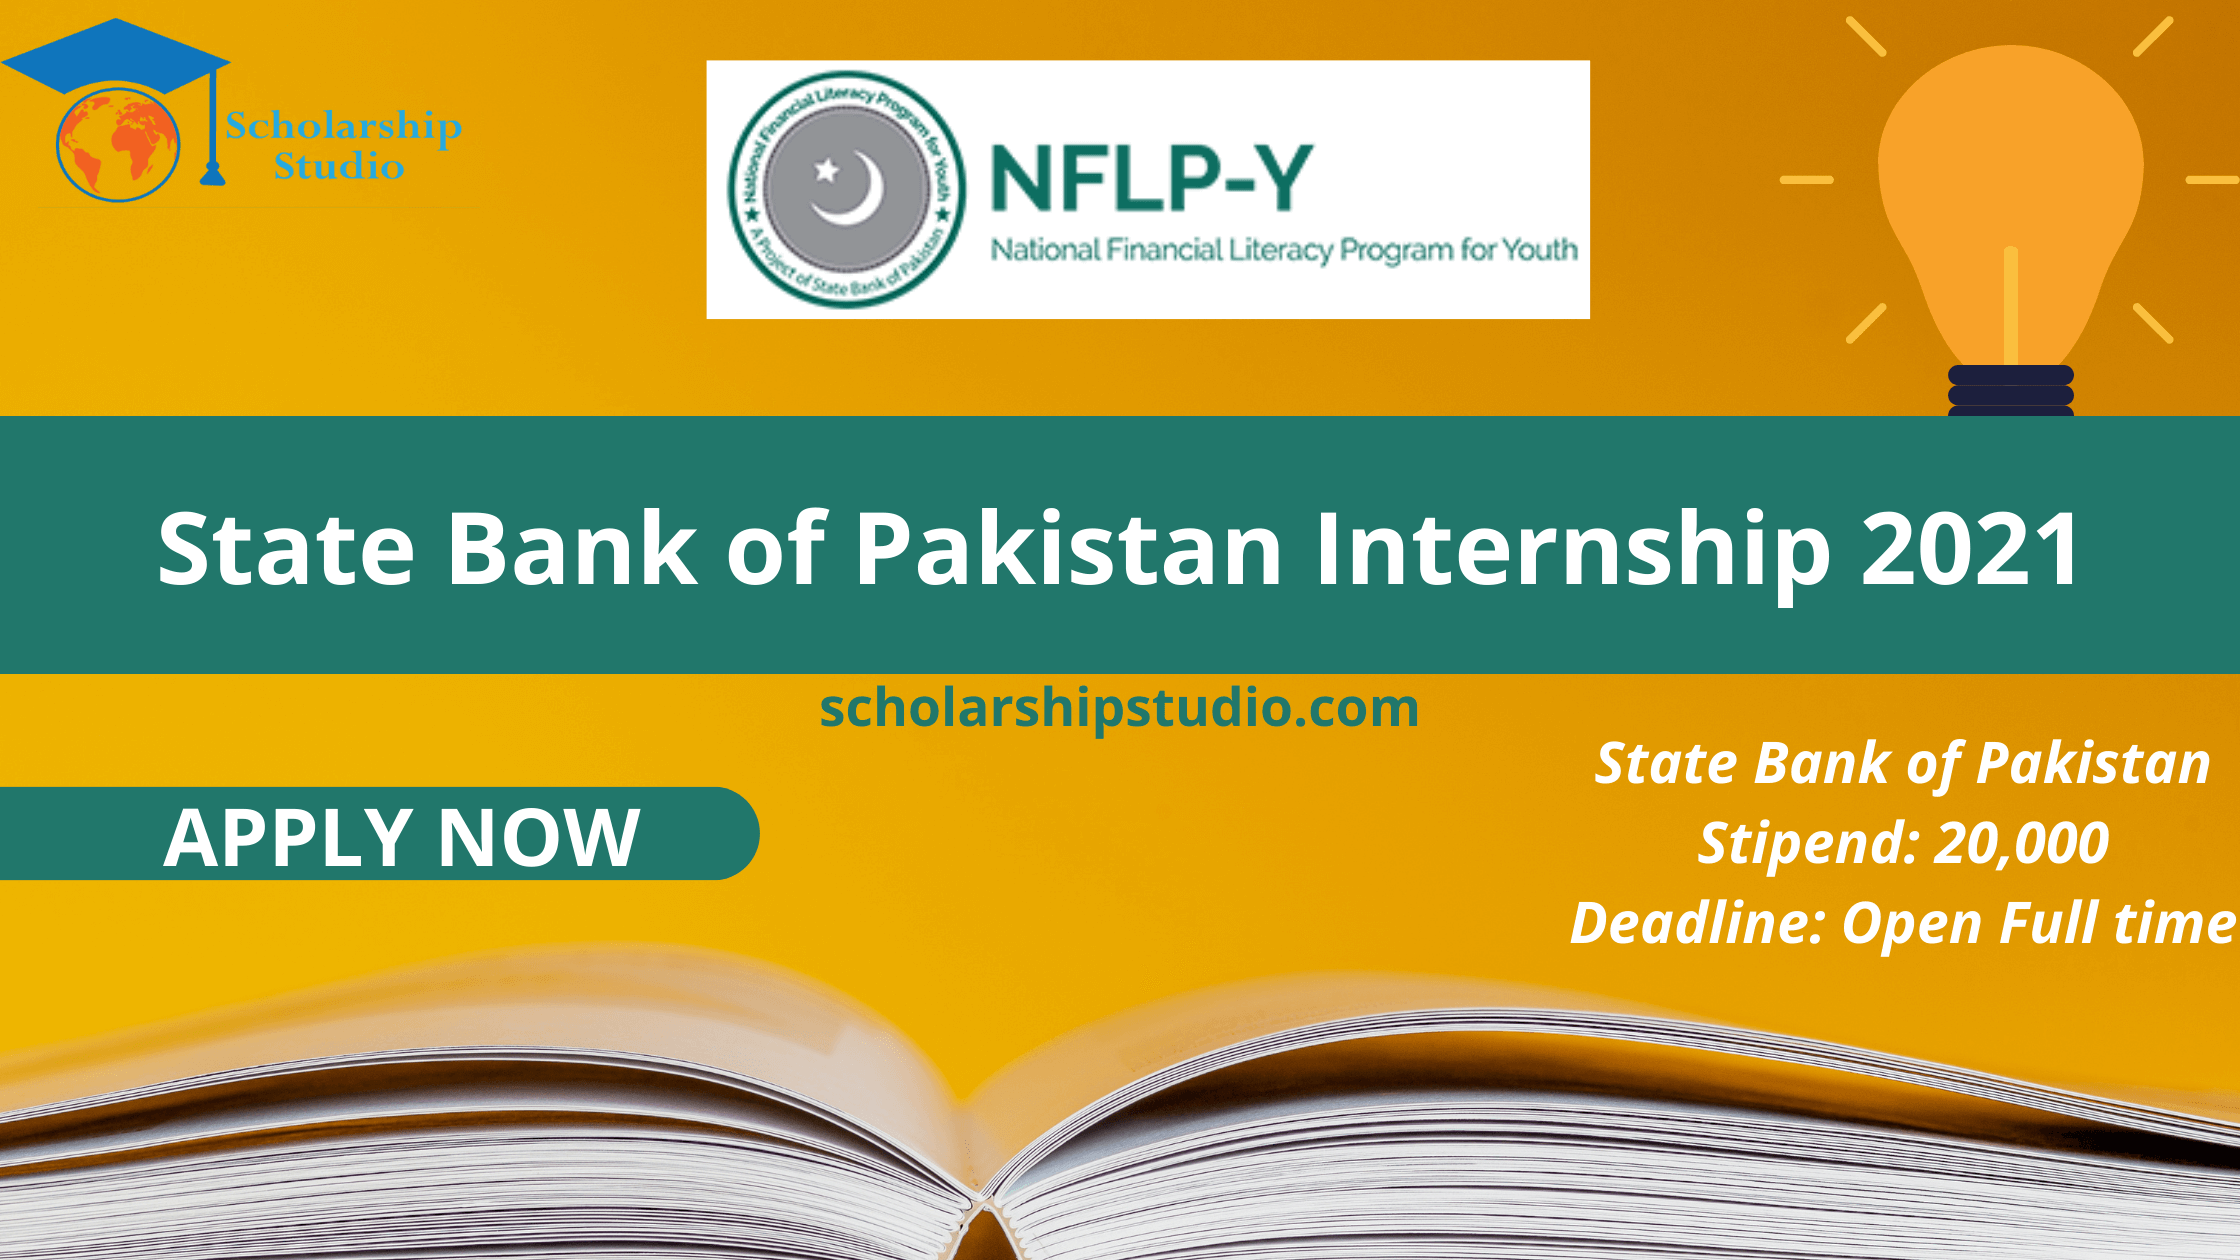 State Bank of Pakistan Internship 2022 Scholarship studio